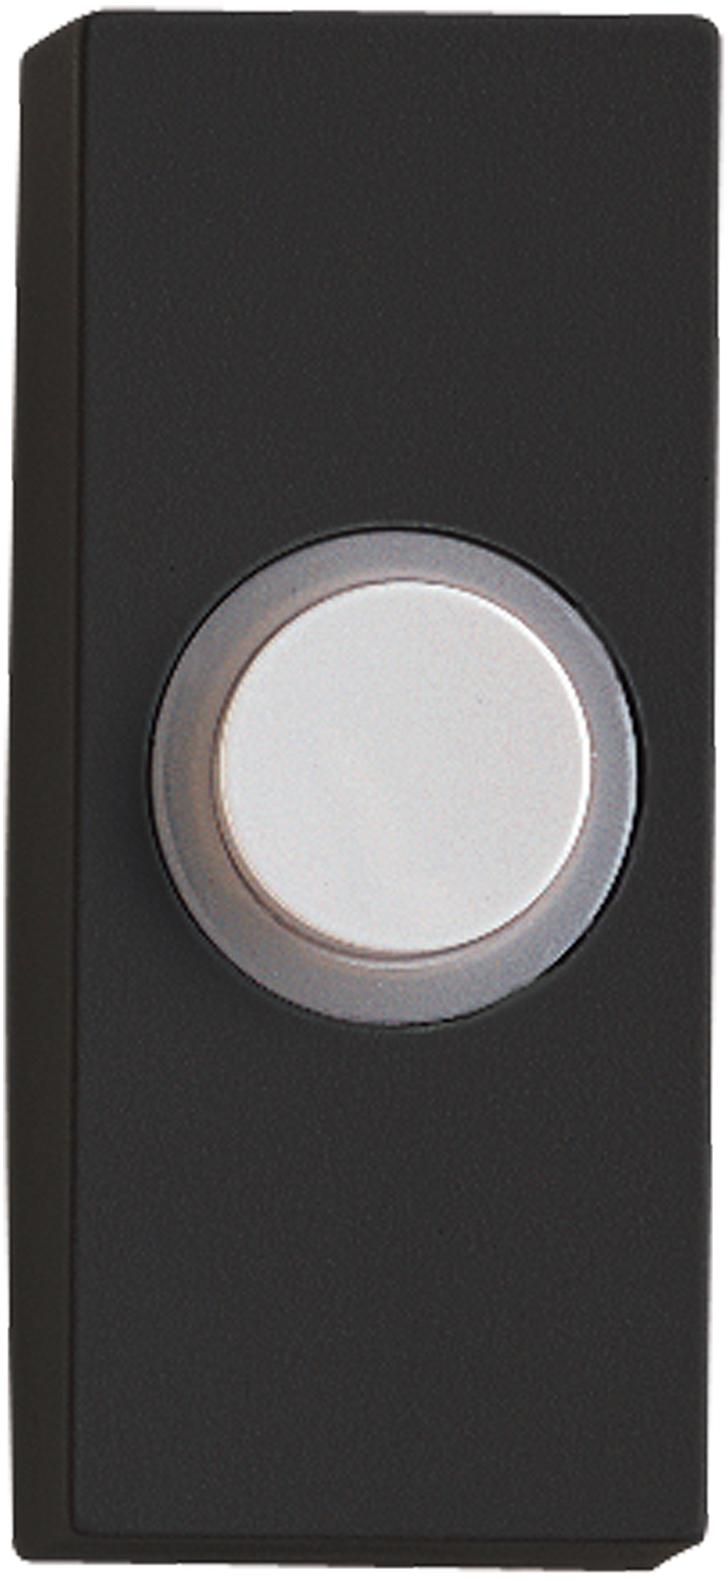 Wired Illuminated Push Button